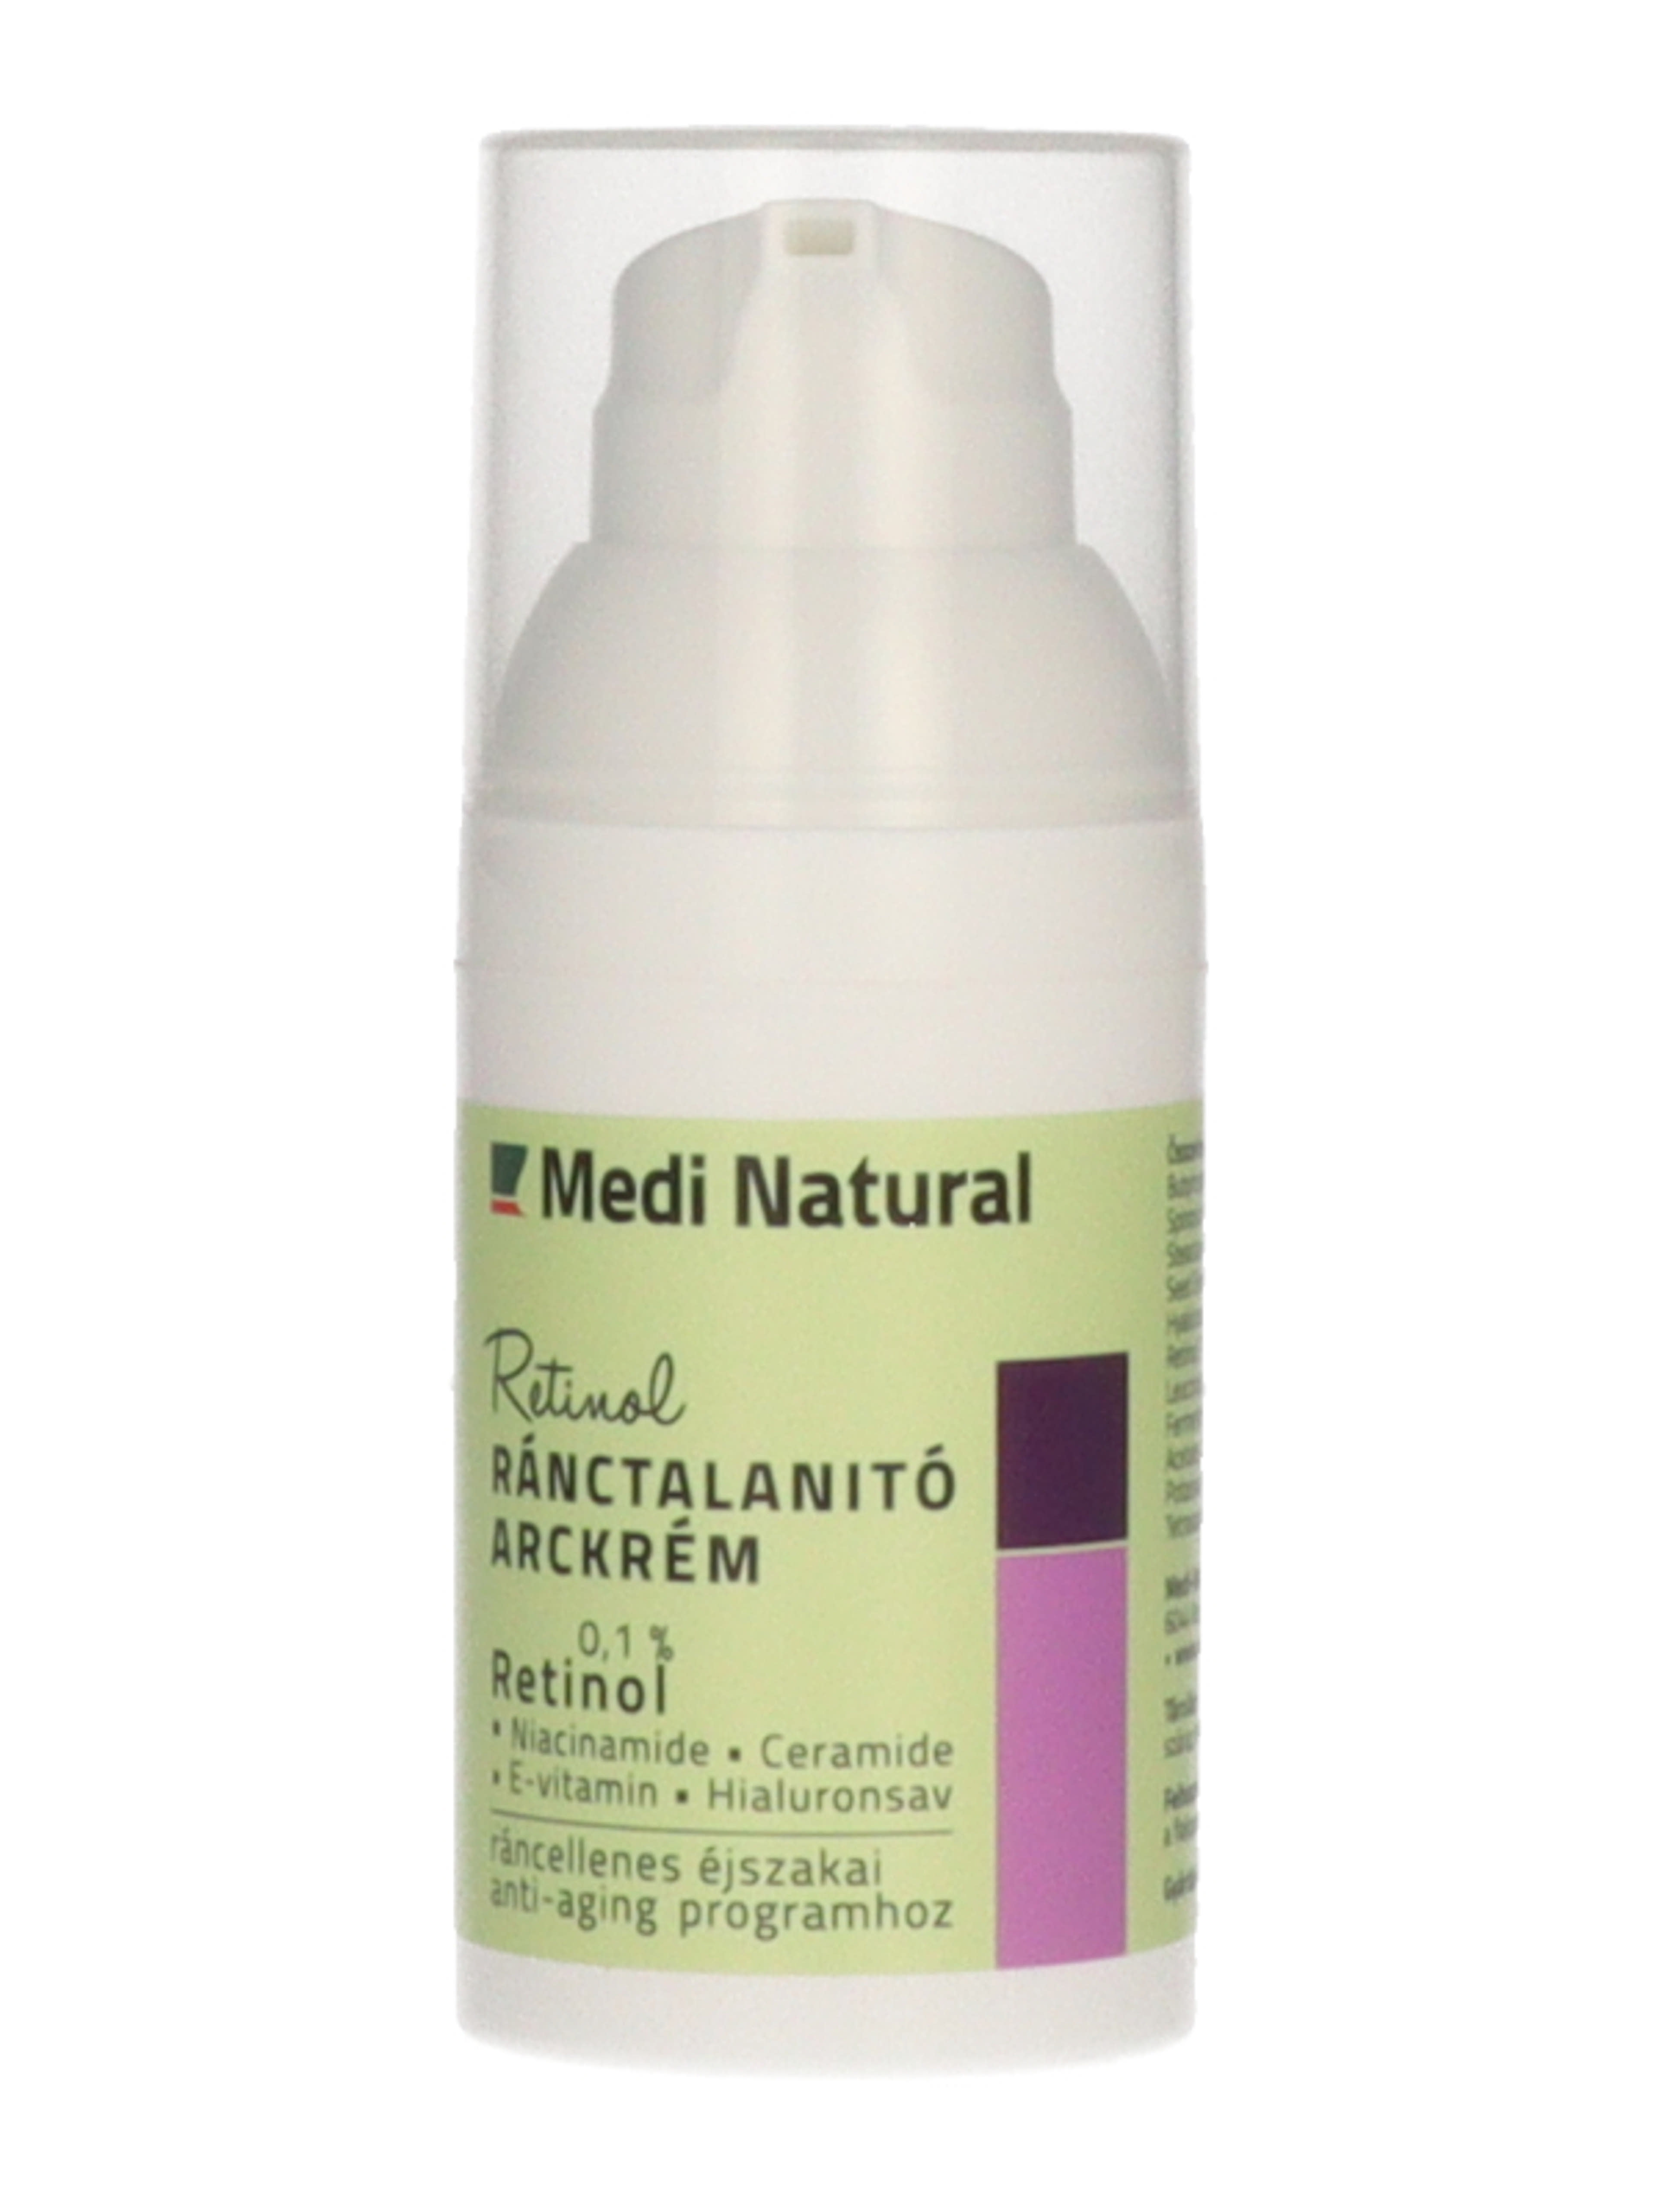 Medi Natural Retinol 0,1% ránctalanító arckrém - 30 ml-2